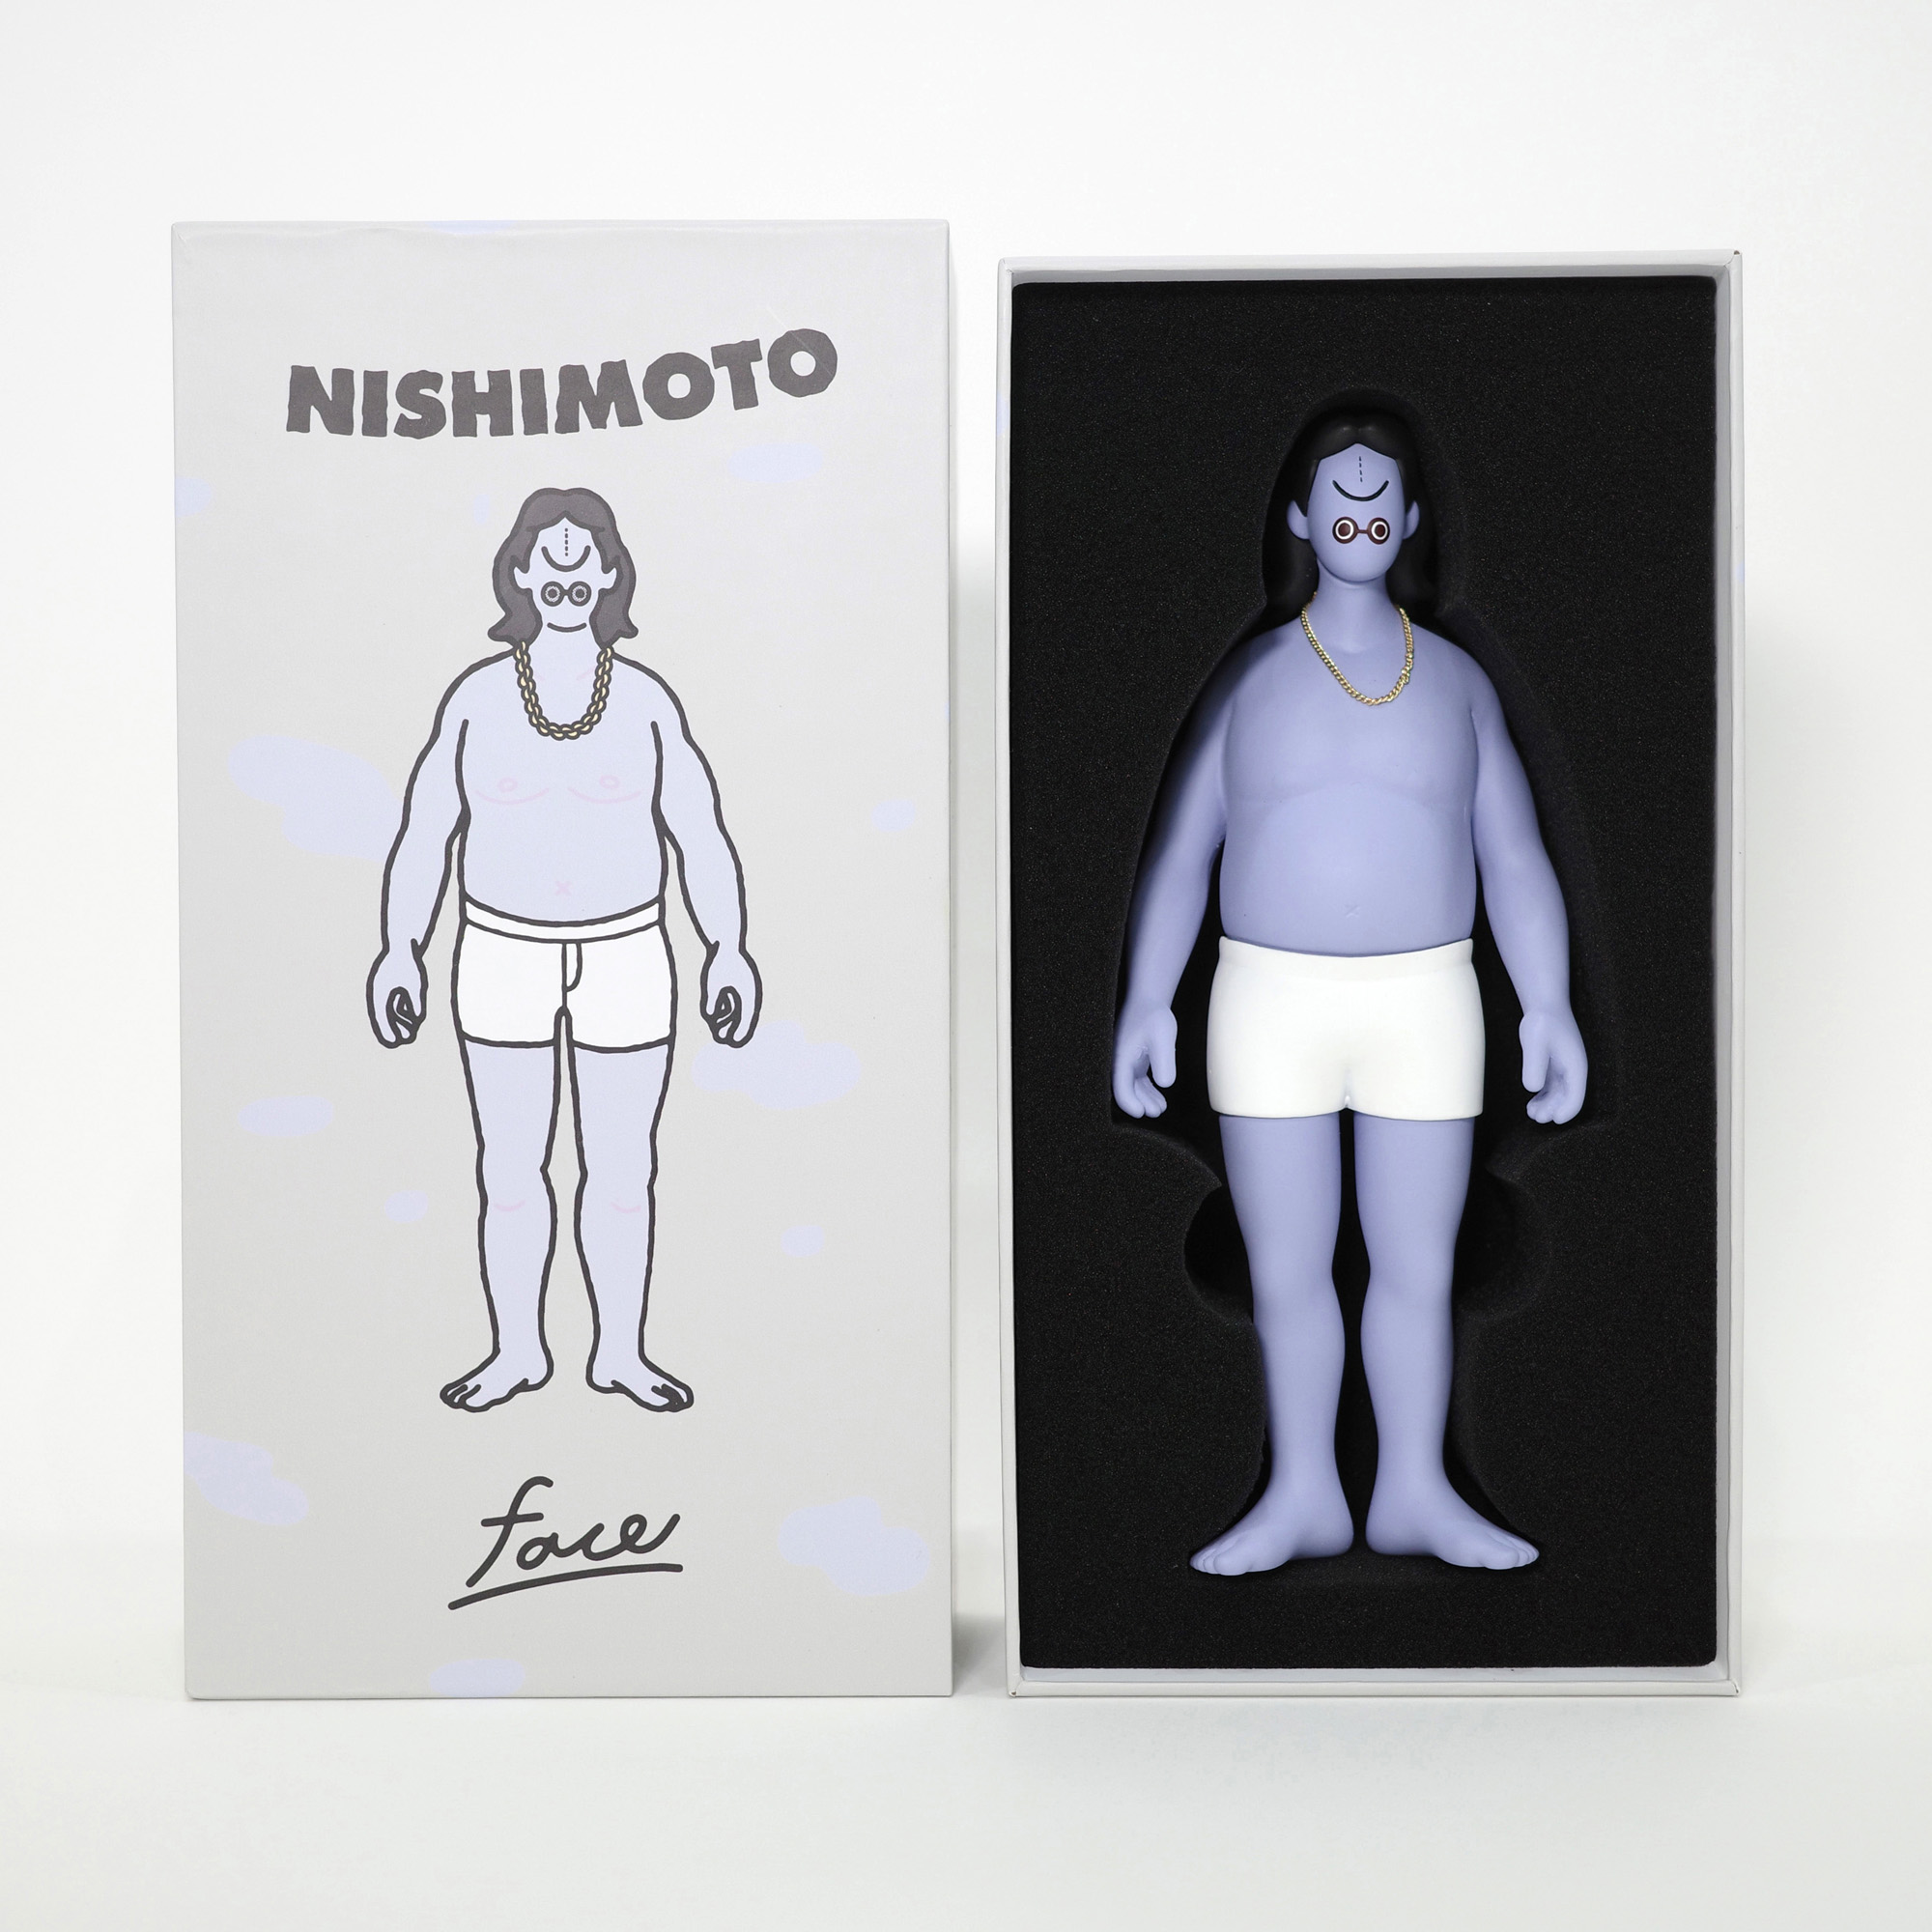 NISHIMOTO IS THE MOUTH × face Figurefaceoka